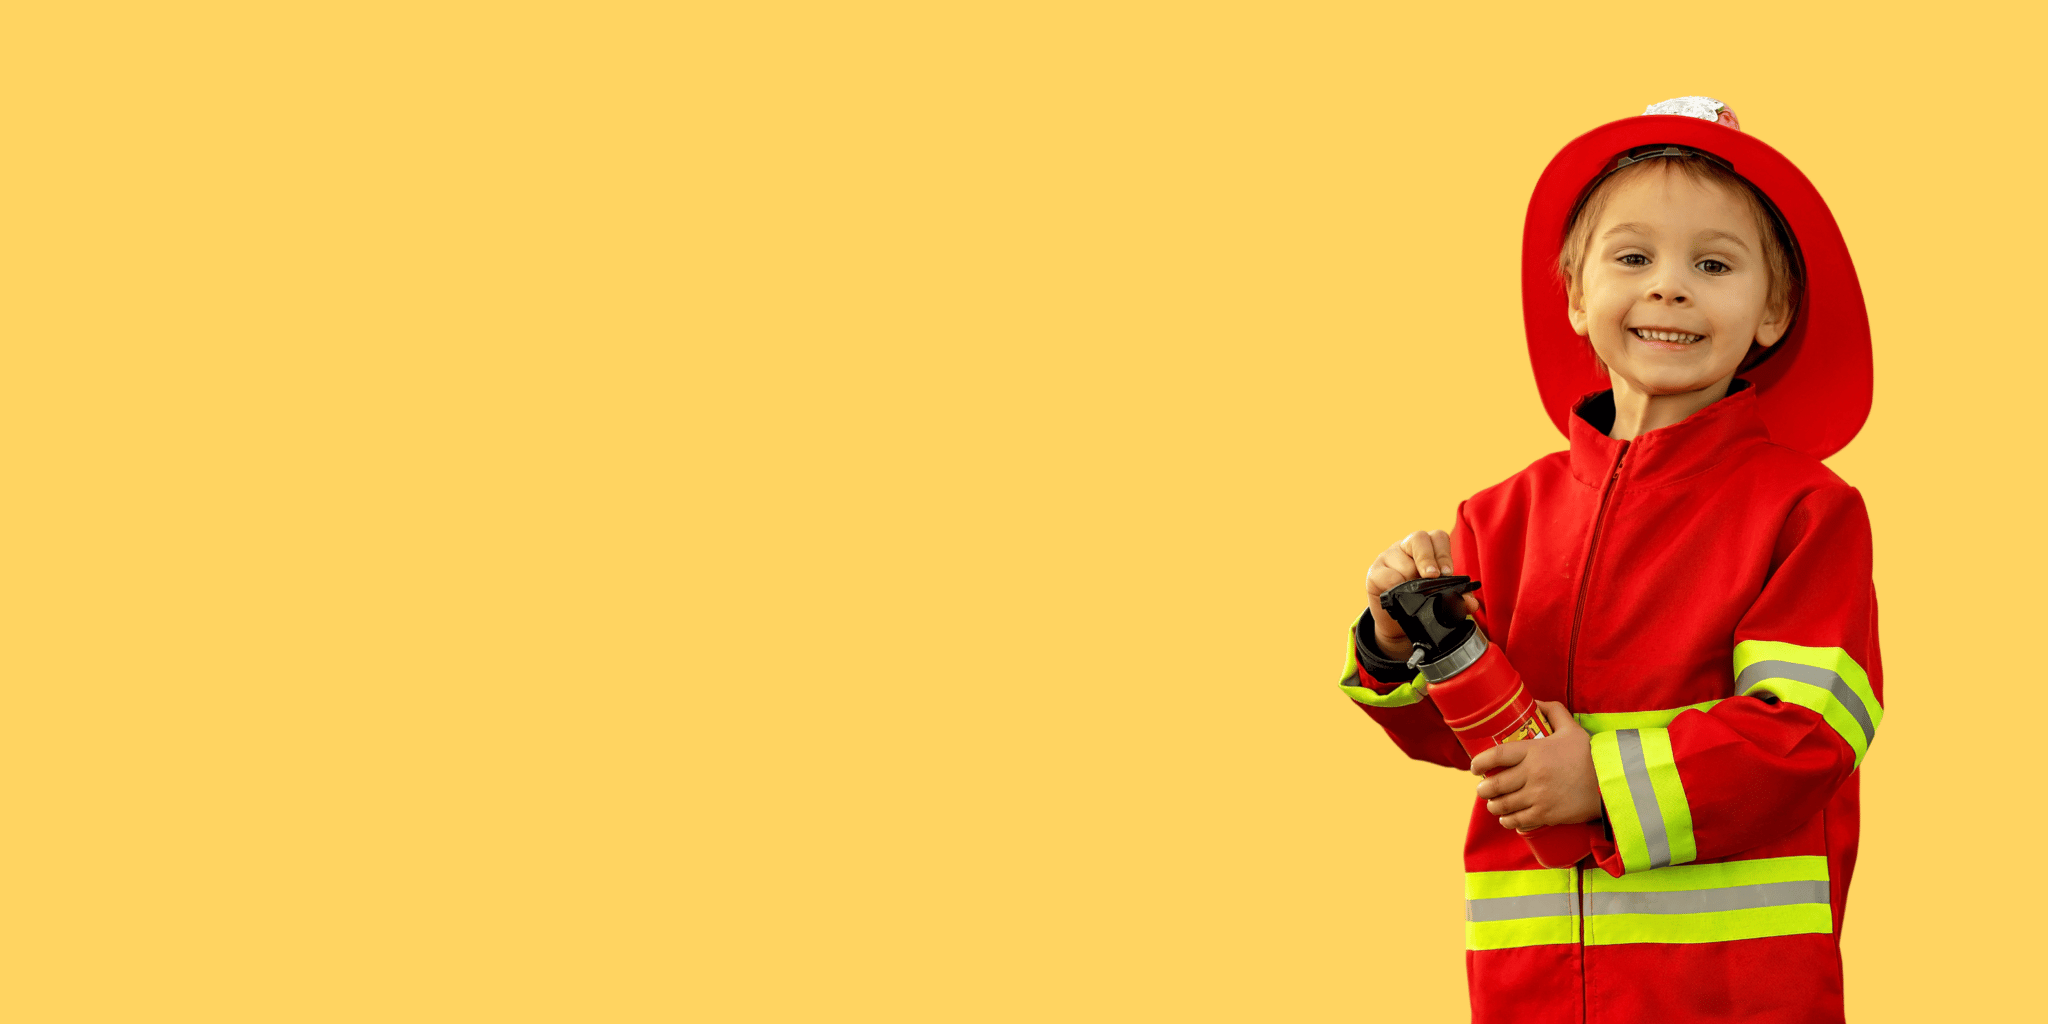 brandweer-thema-kinderfeestje